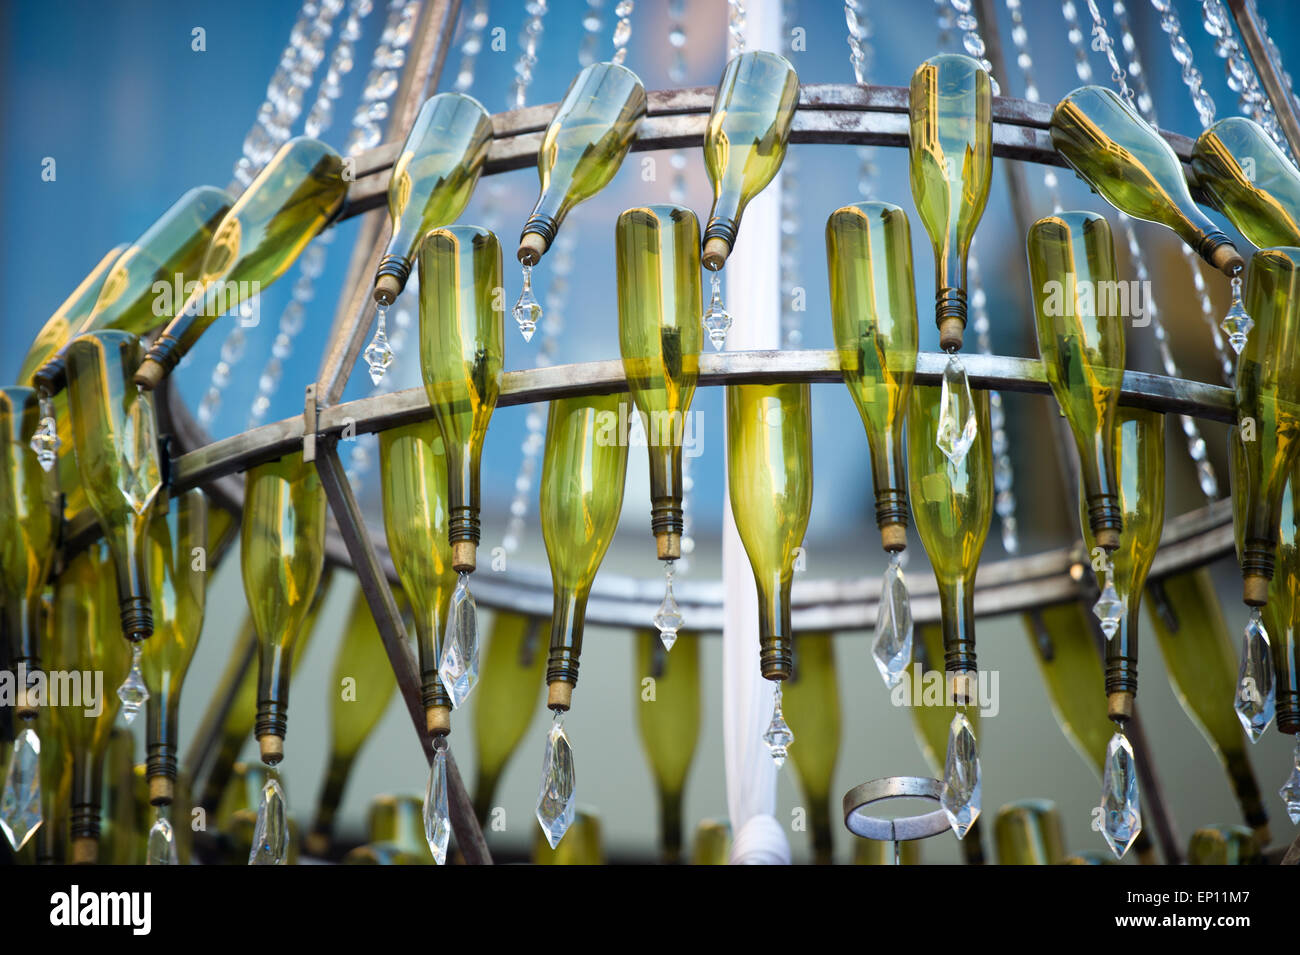 Chandelier made of green wine bottles. Stock Photo